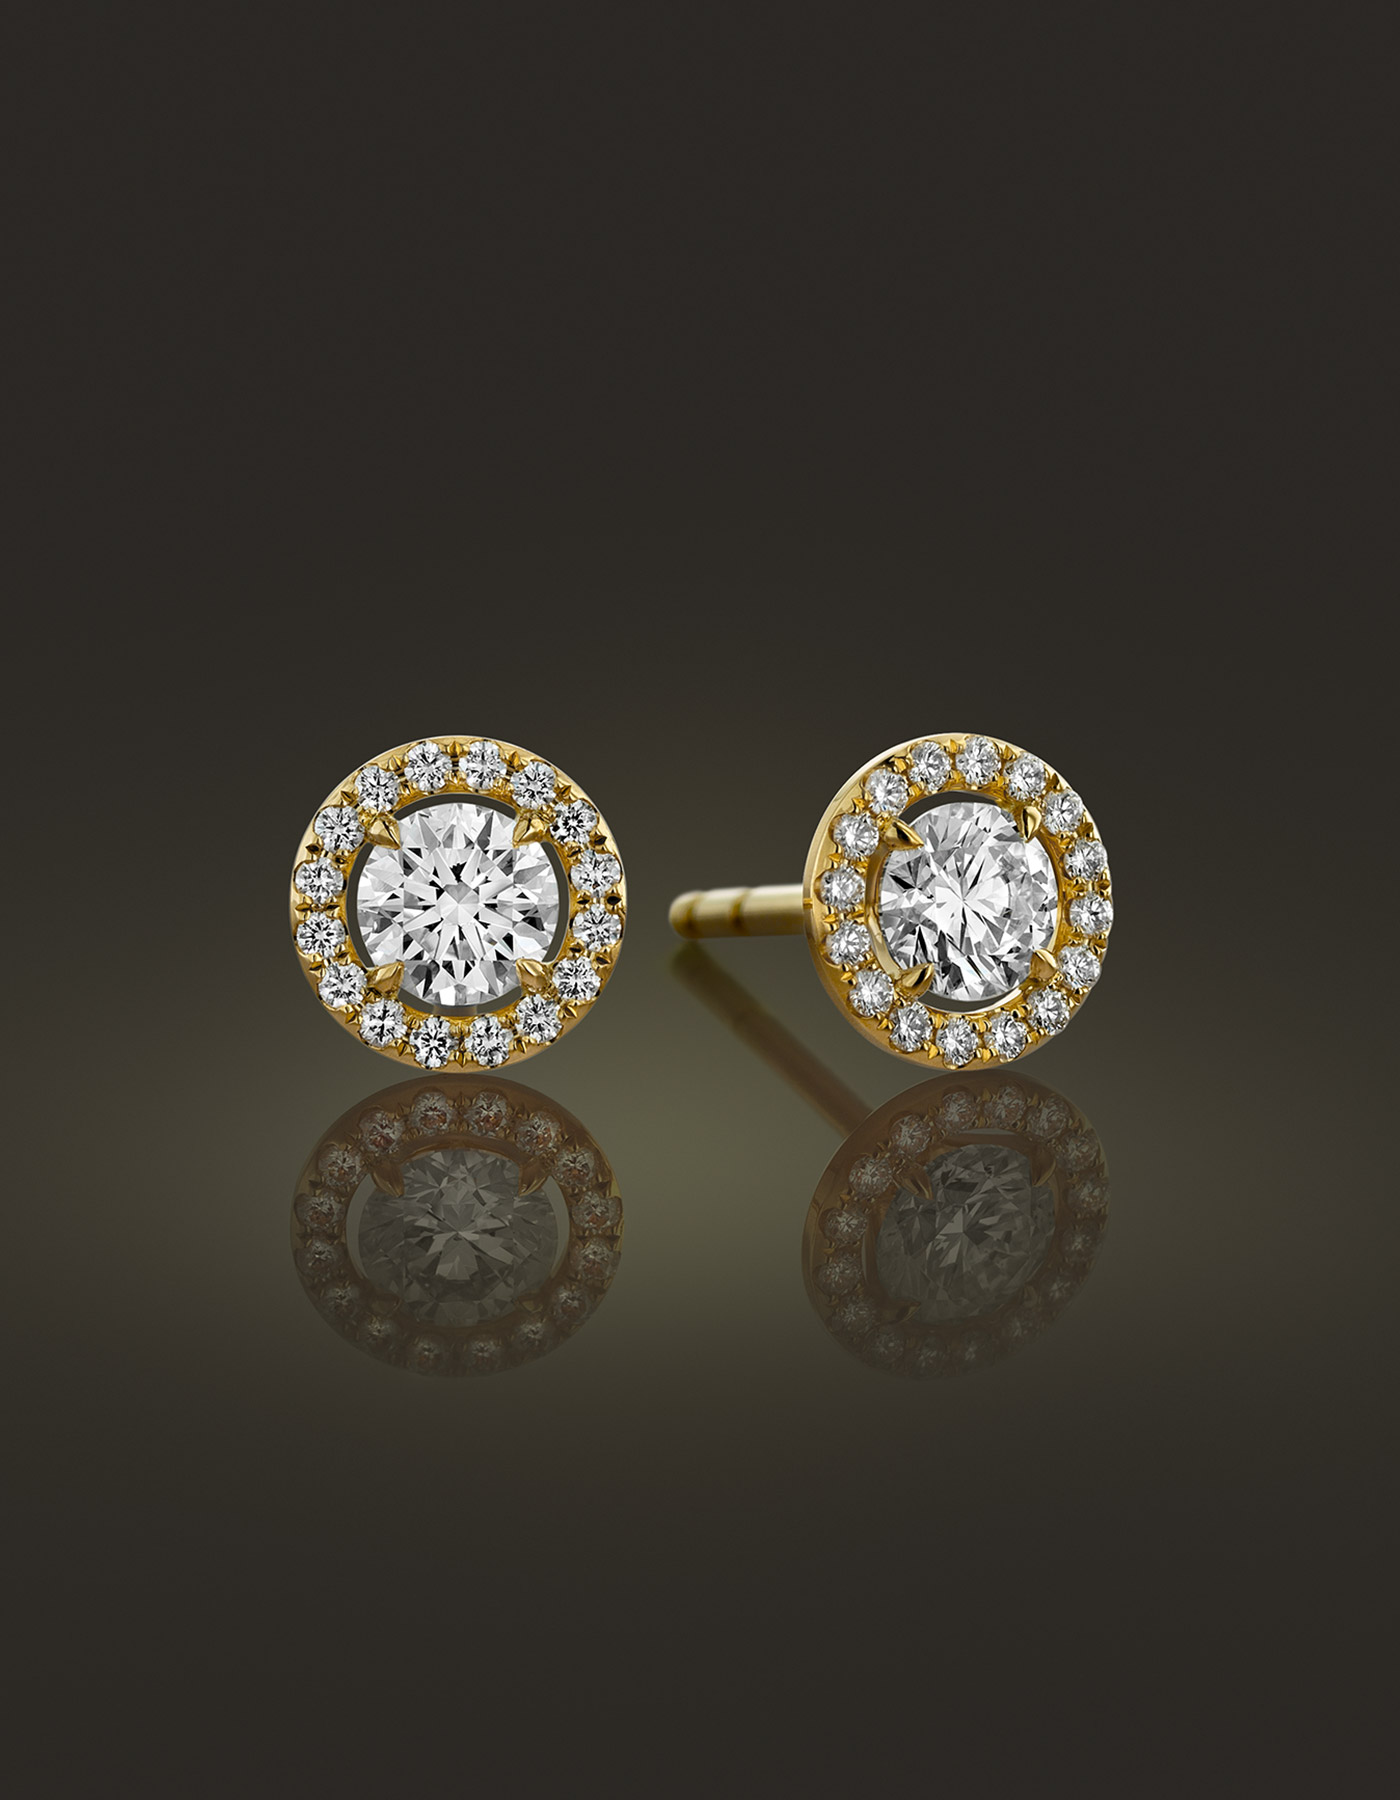 Guinnot Anonymous Halo diamond earrings in 18k yellow gold